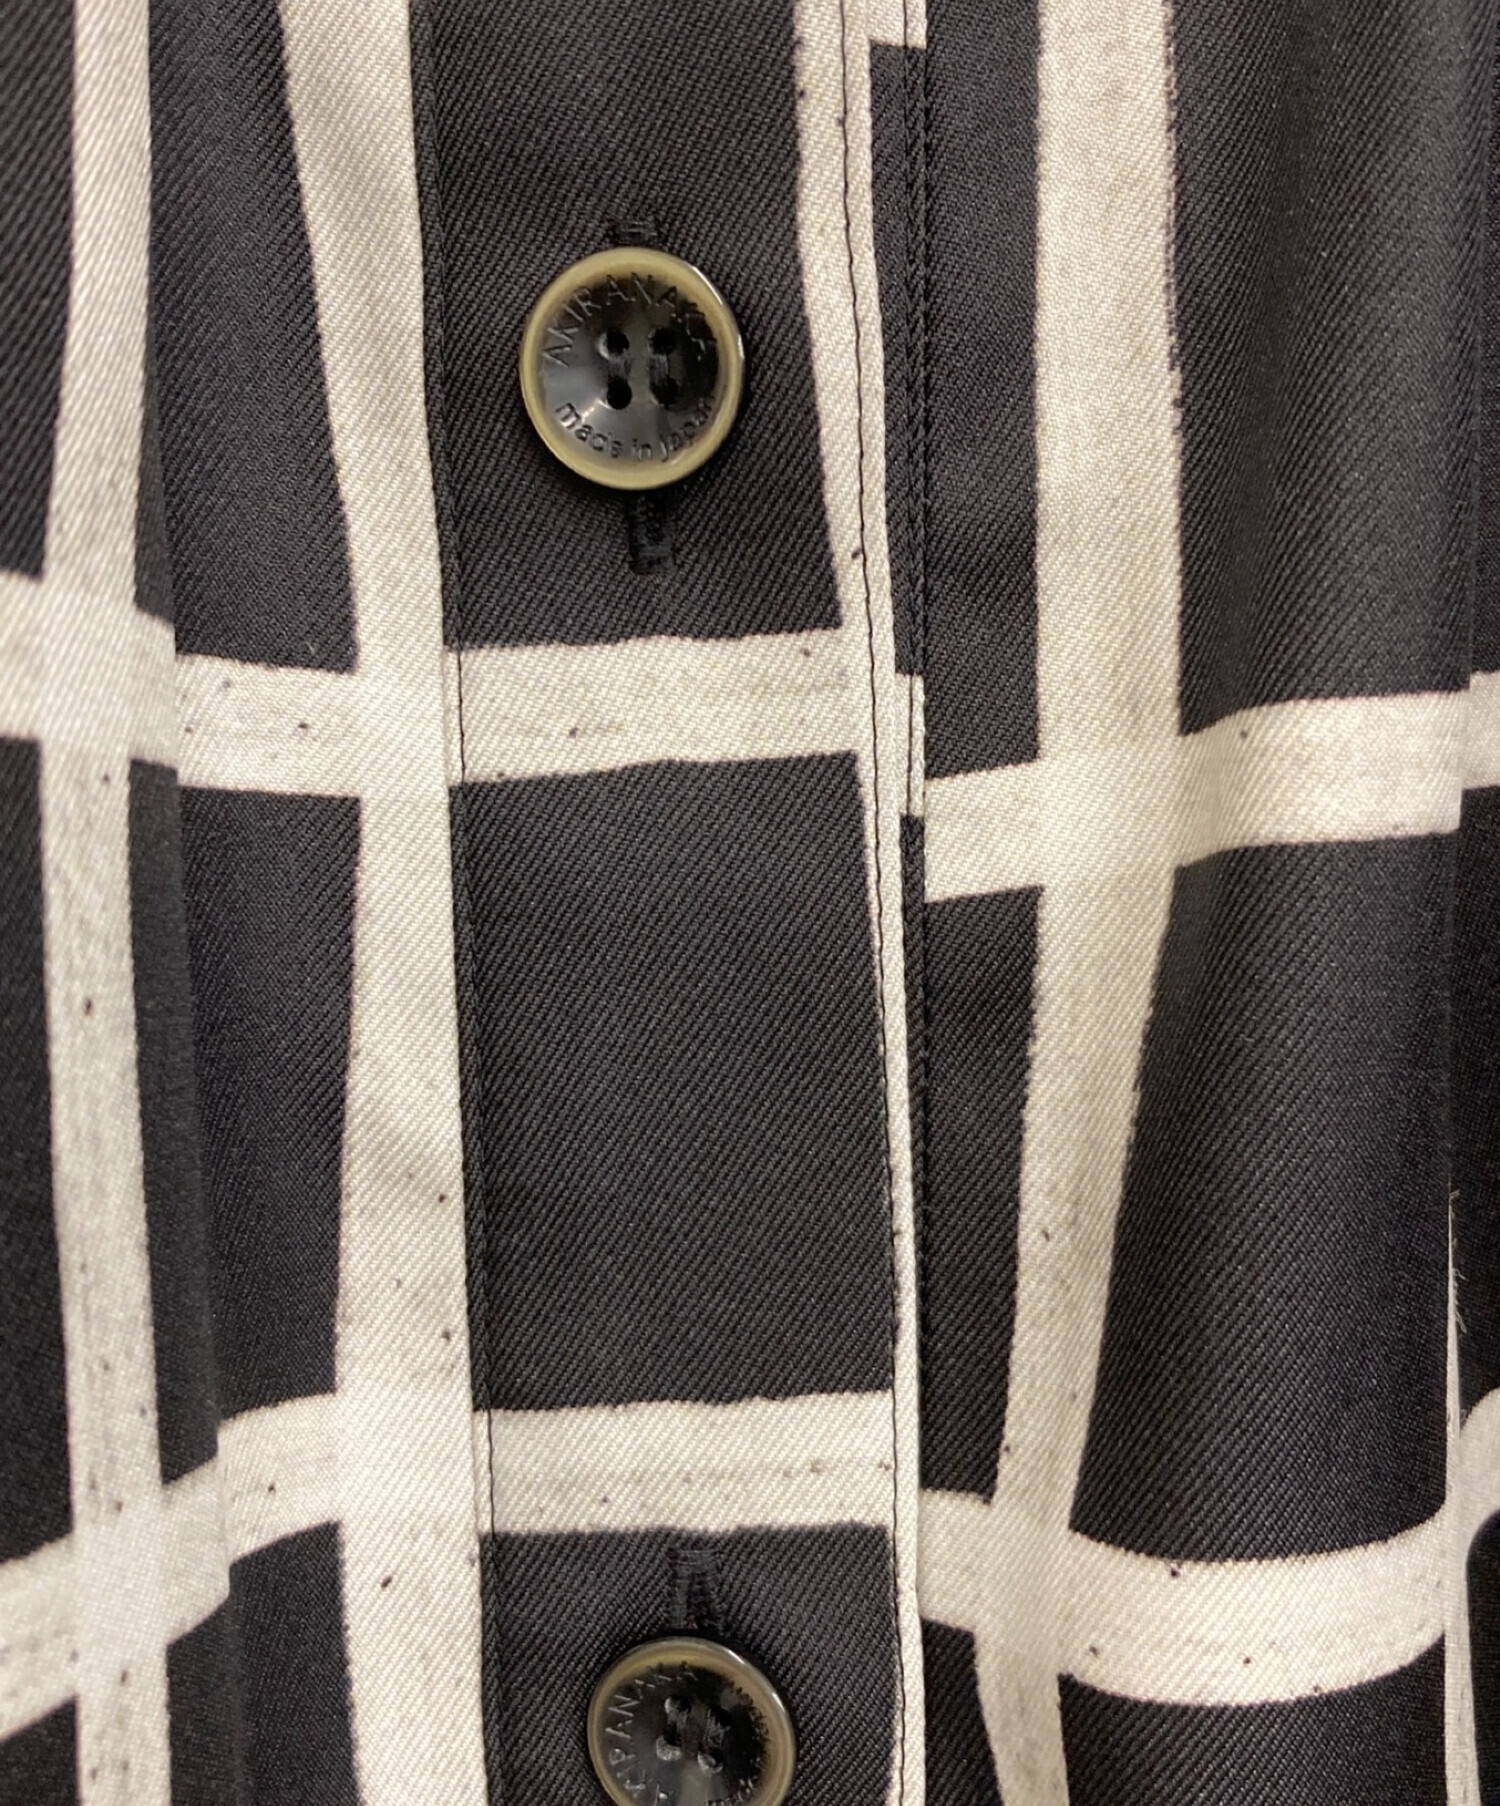 AKIRA NAKA (アキラナカ) ベルテッドスカート ブラック×グレー サイズ:2